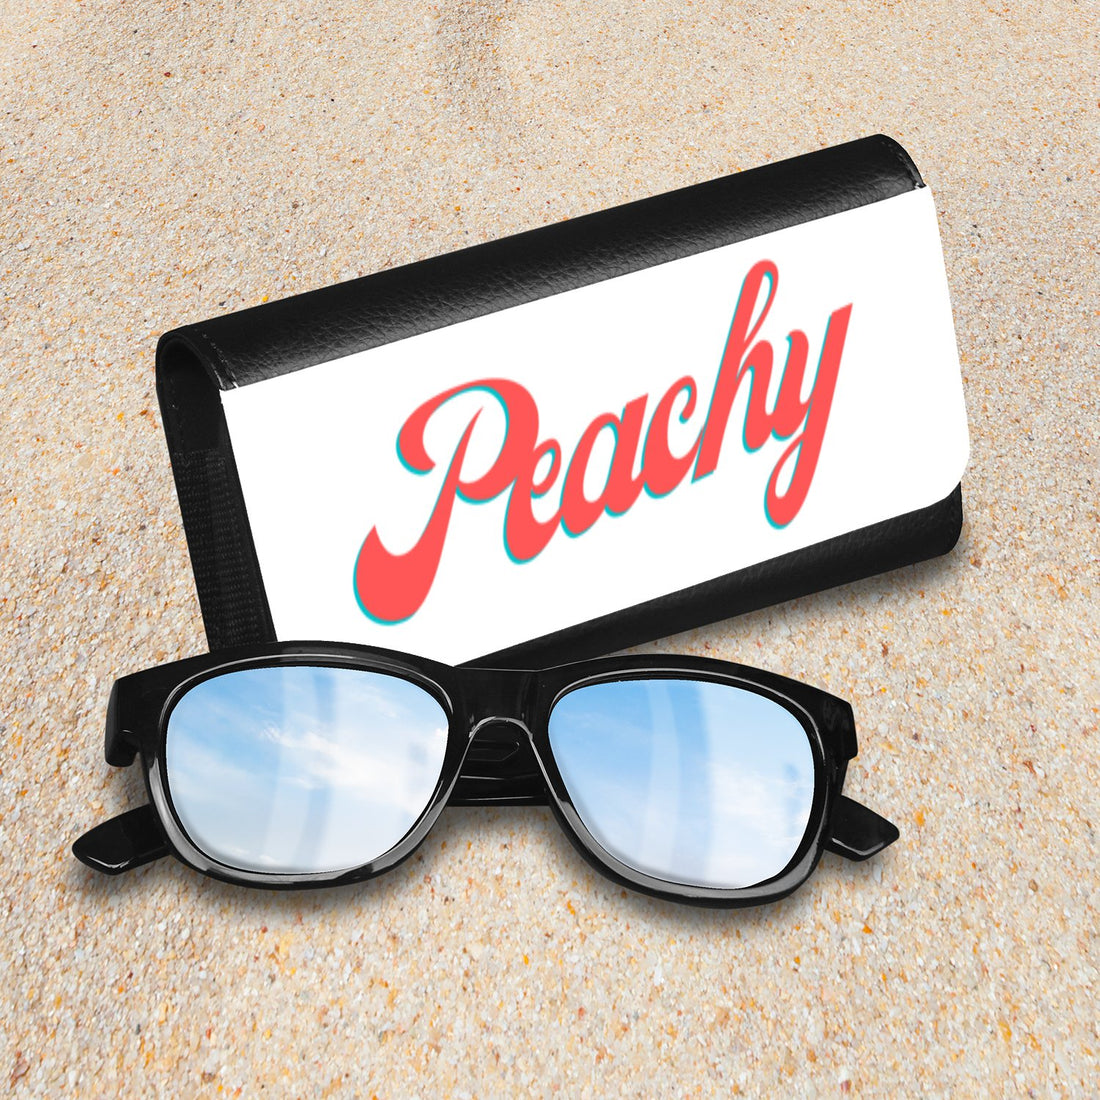 Peachy Sunglasses Case - Positively Sassy - Peachy Sunglasses Case